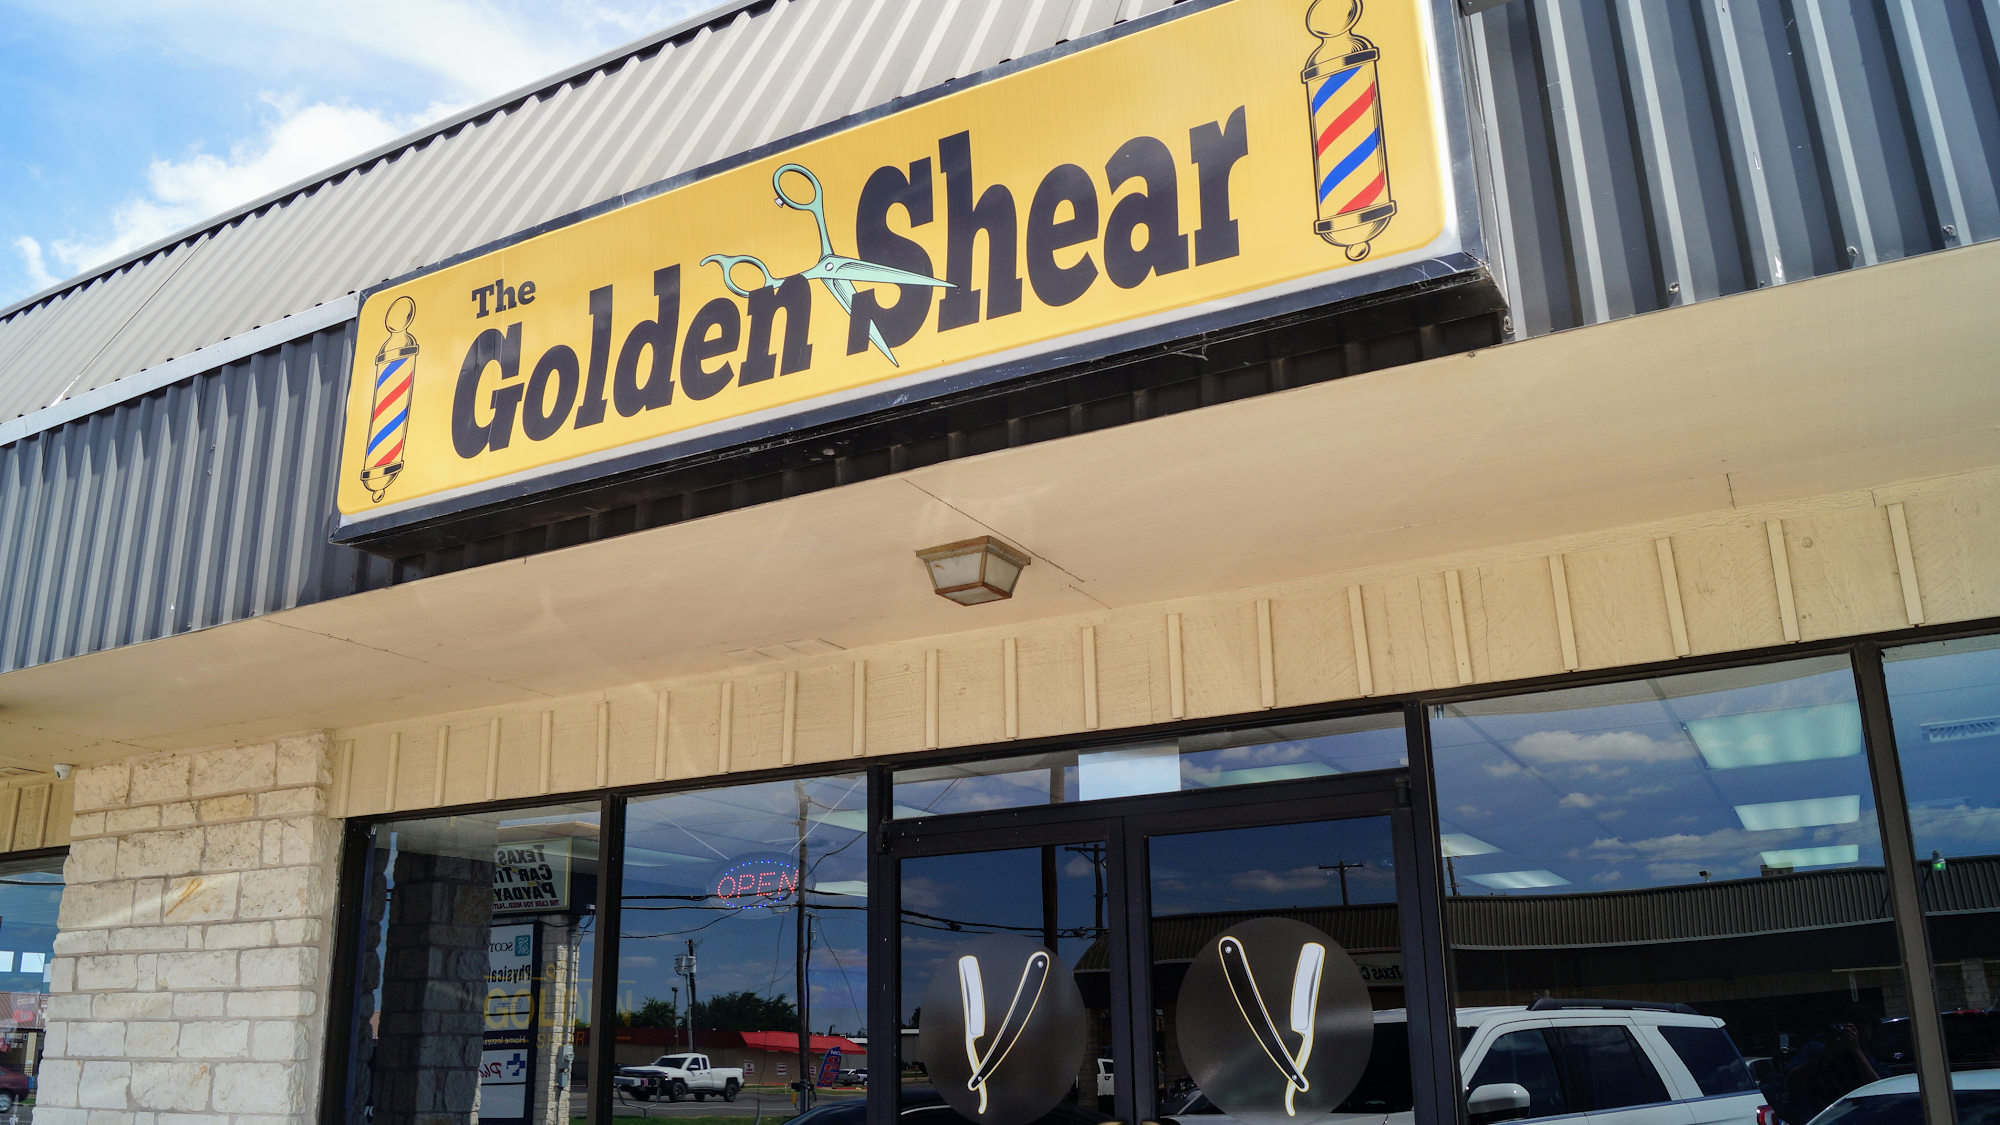 The Golden shear Waco